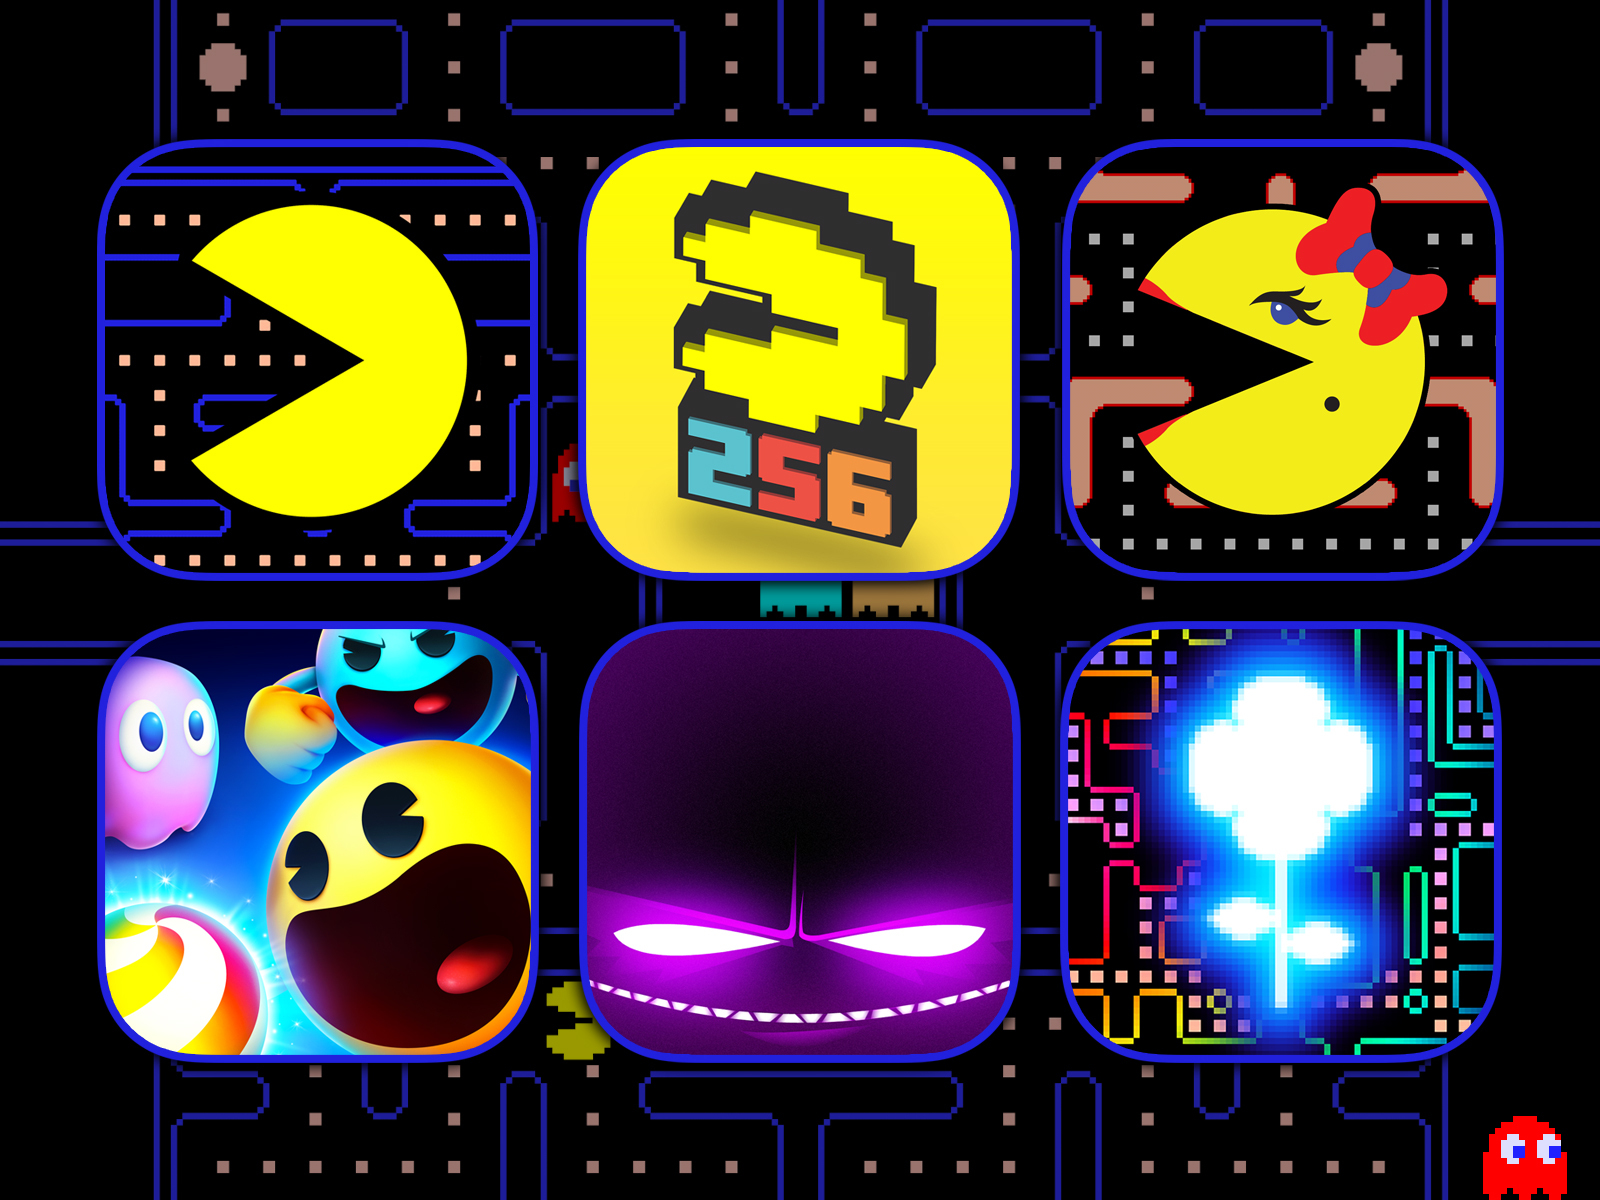 All Pac-Man Games